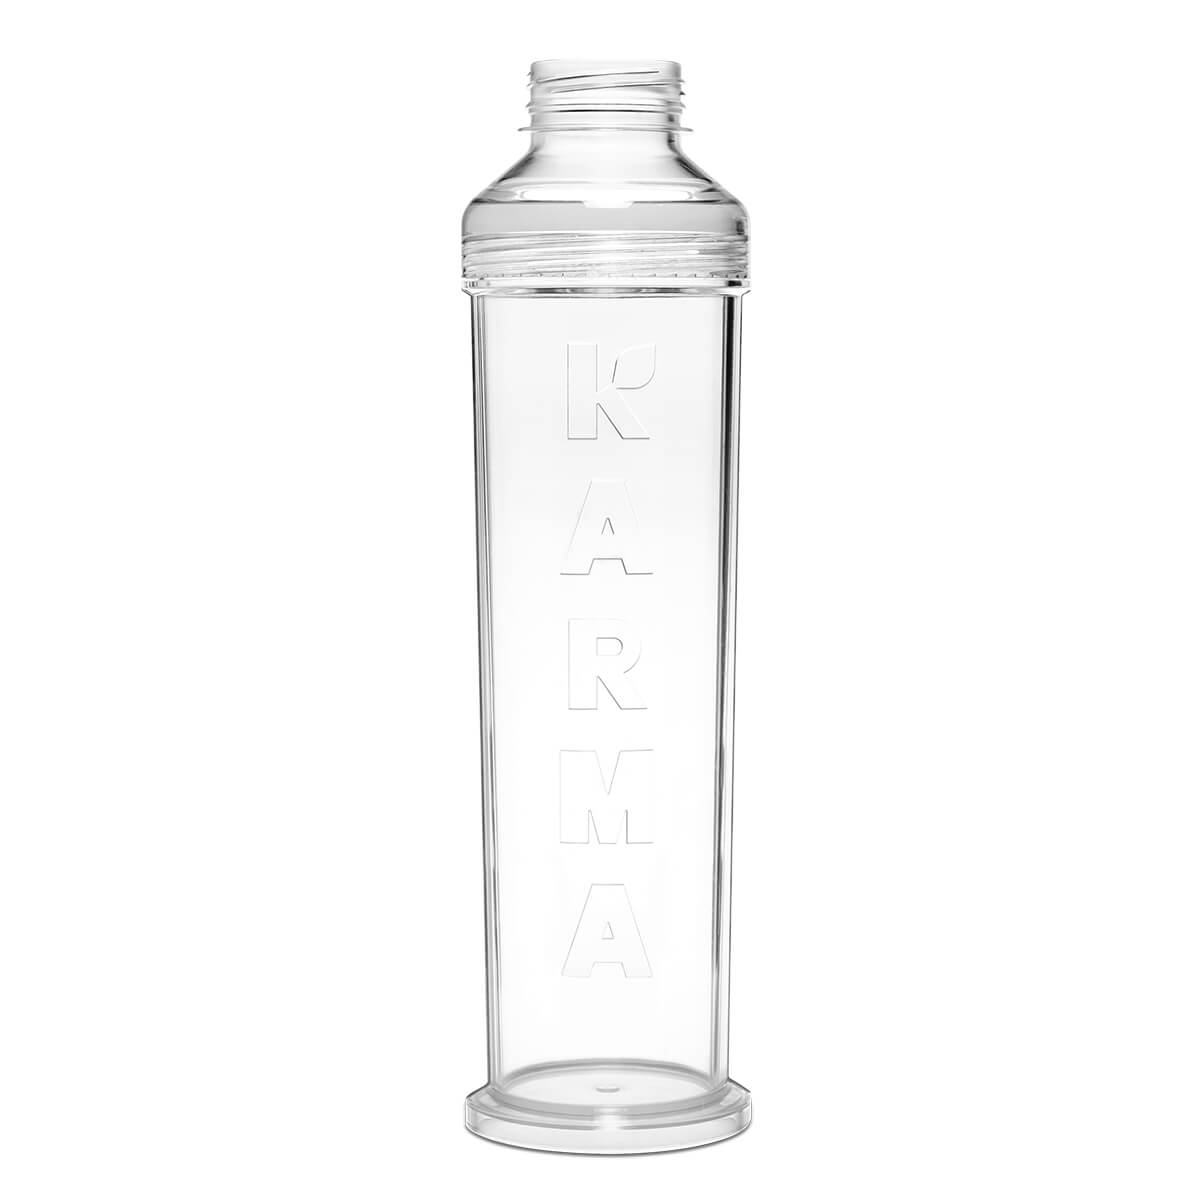 reusable water bottle